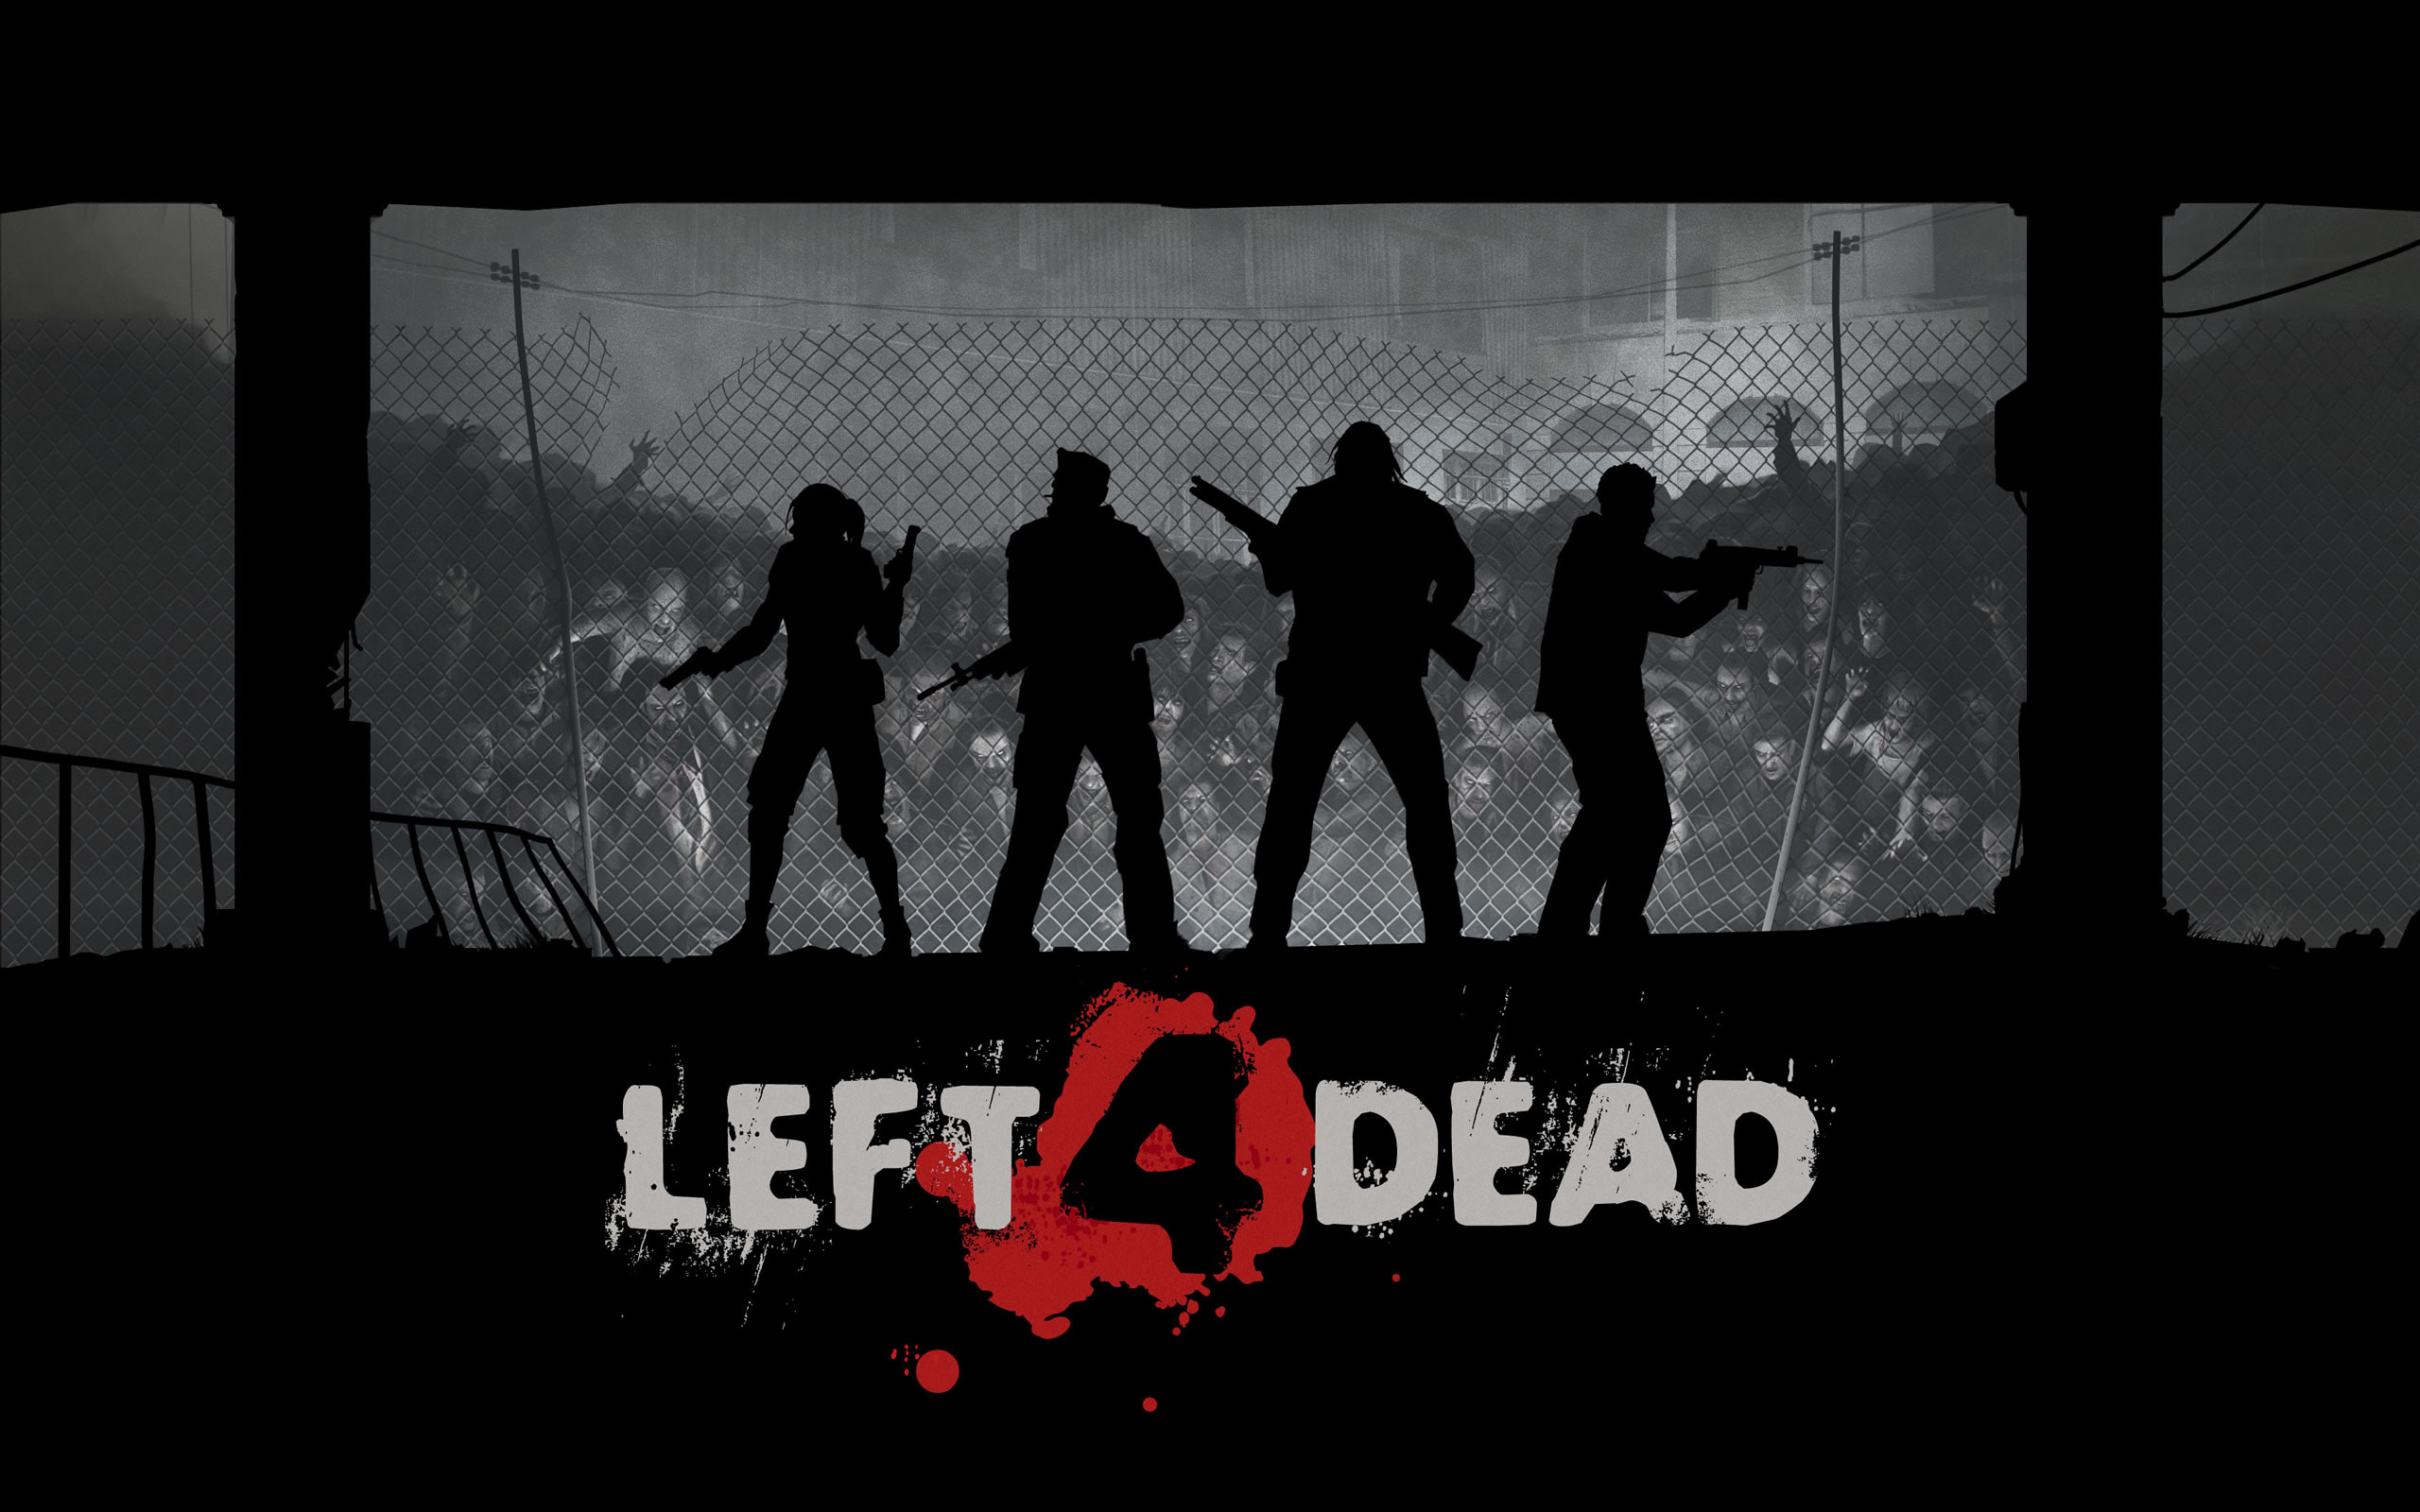 Left 4 Dead - desktop wallpaper